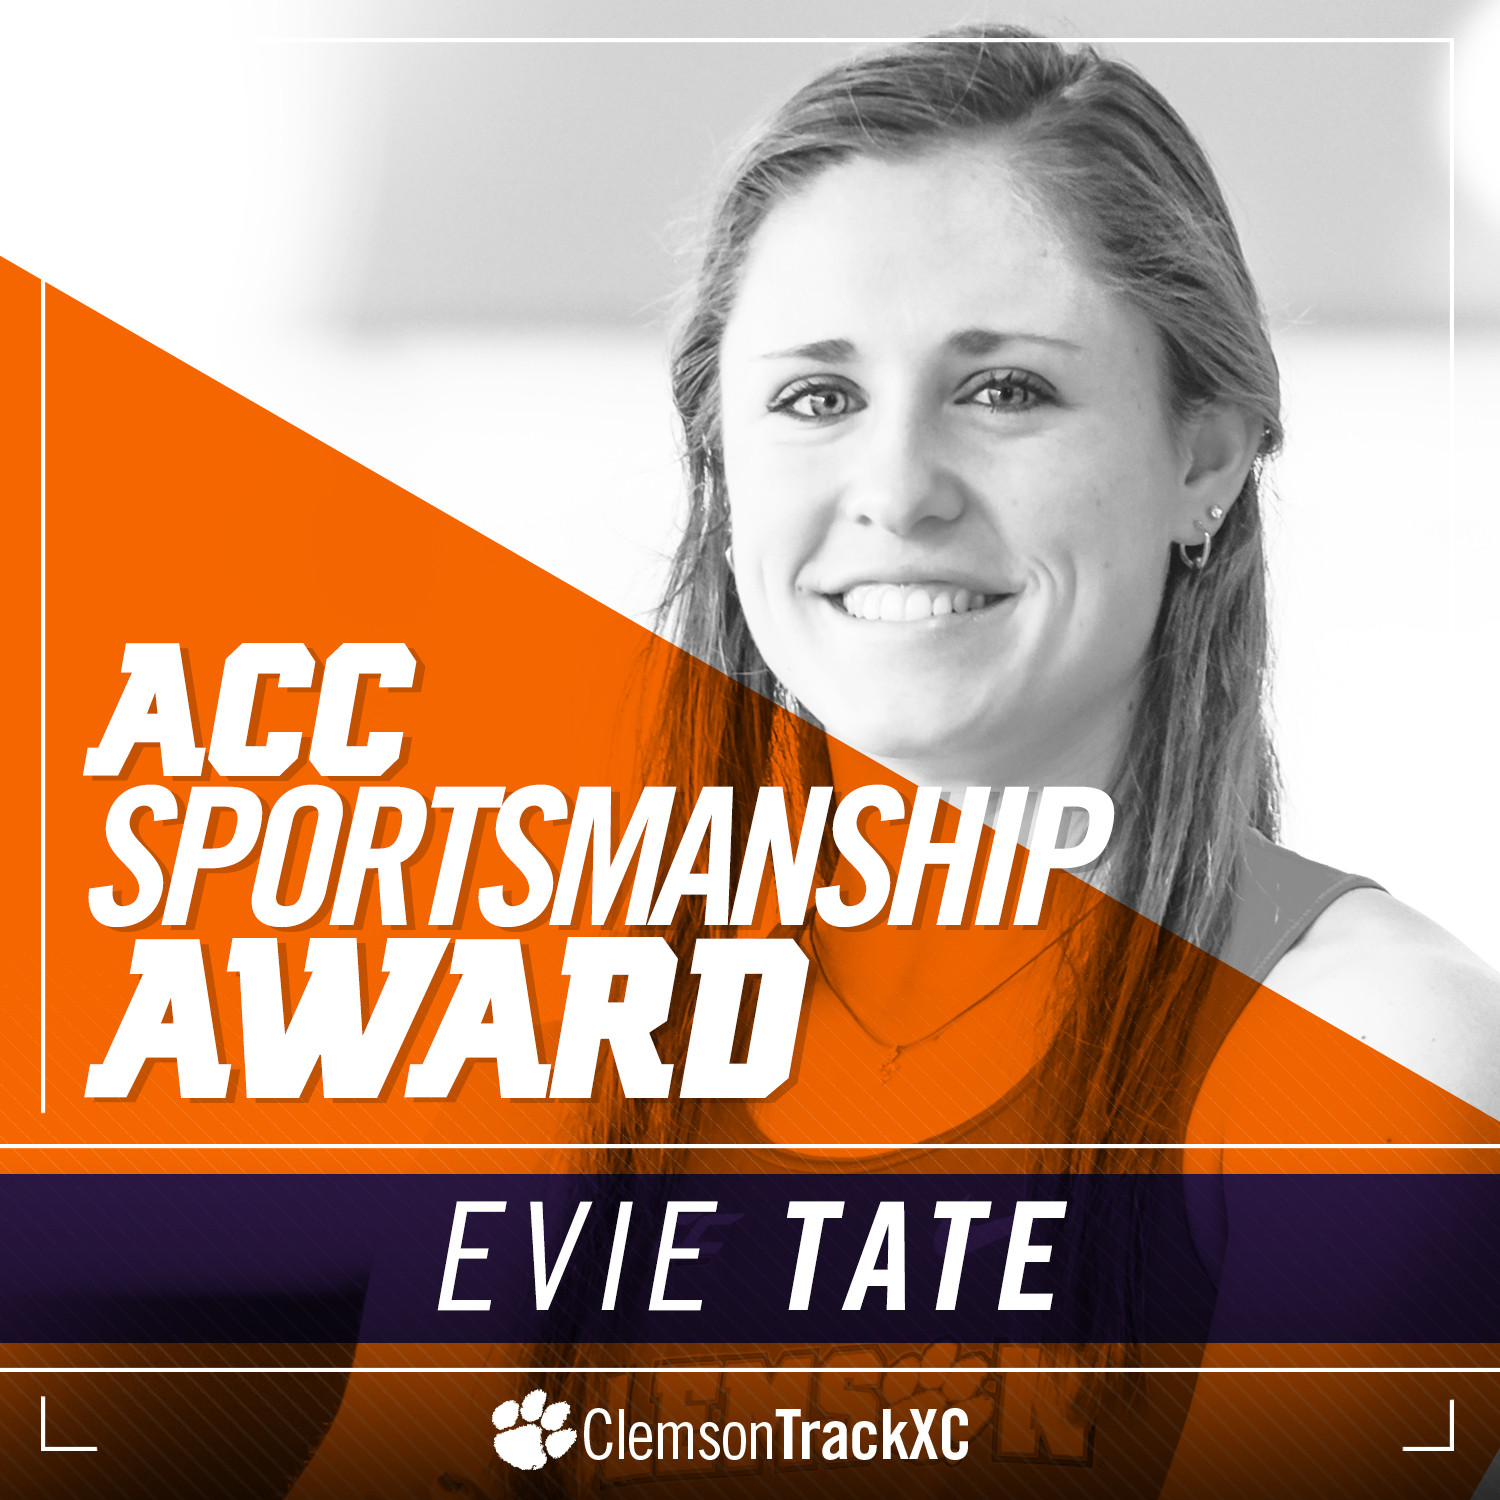 Evie Tate Recognized as ACC Sportsmanship Award Winner